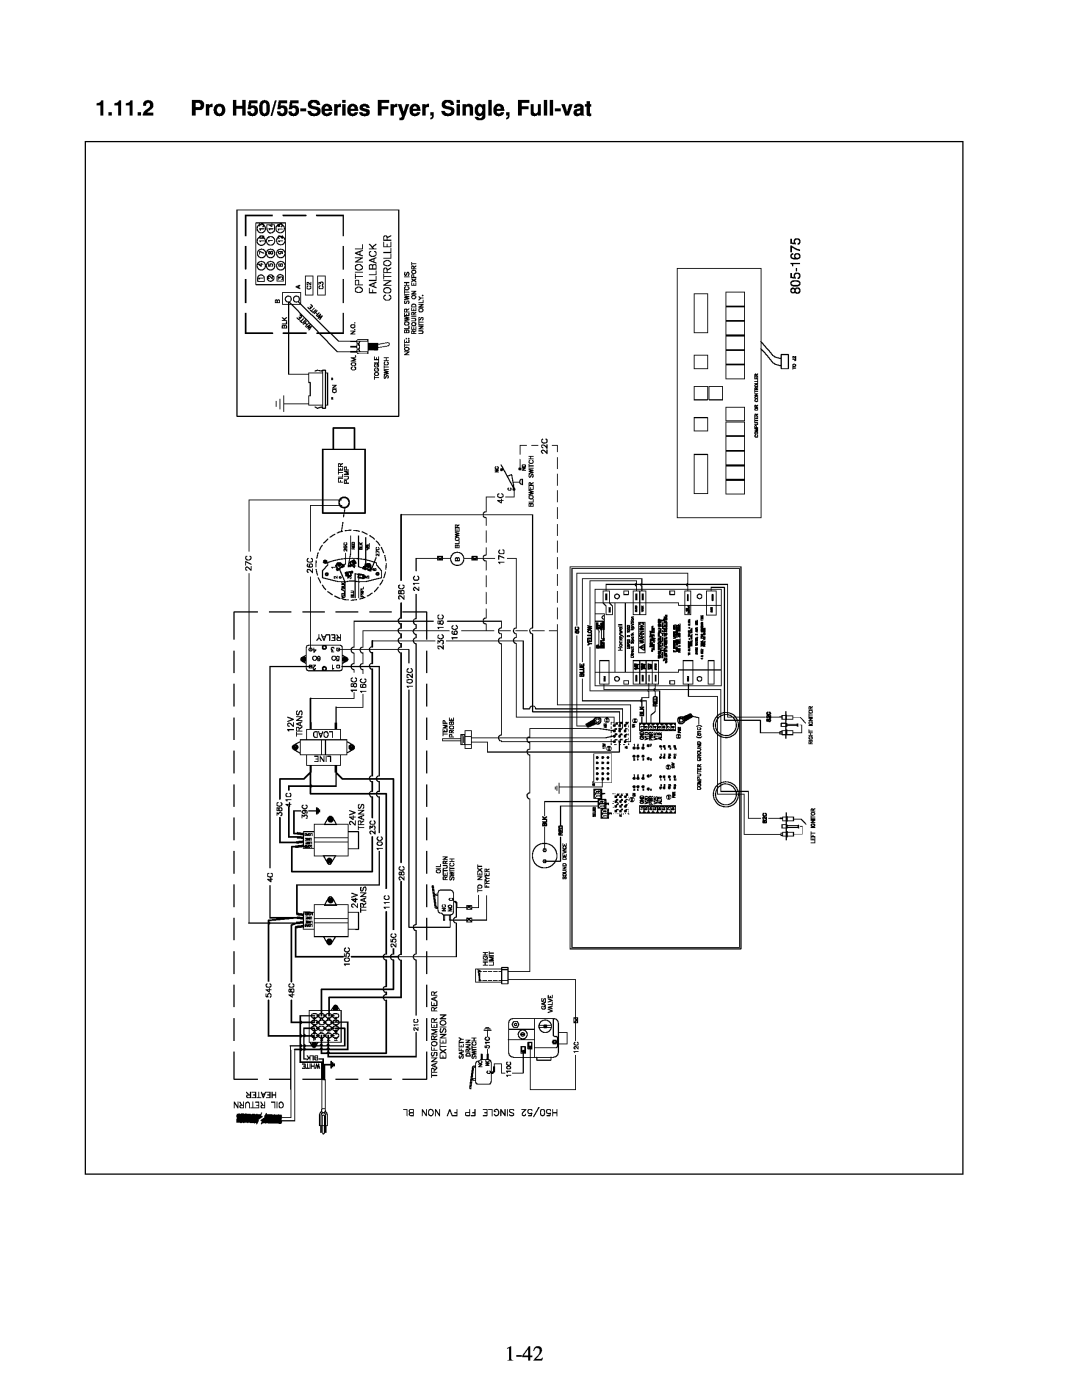 Frymaster manual 1.11.2Pro H50/55-SeriesFryer, Single, Full-vat, 805-1675 